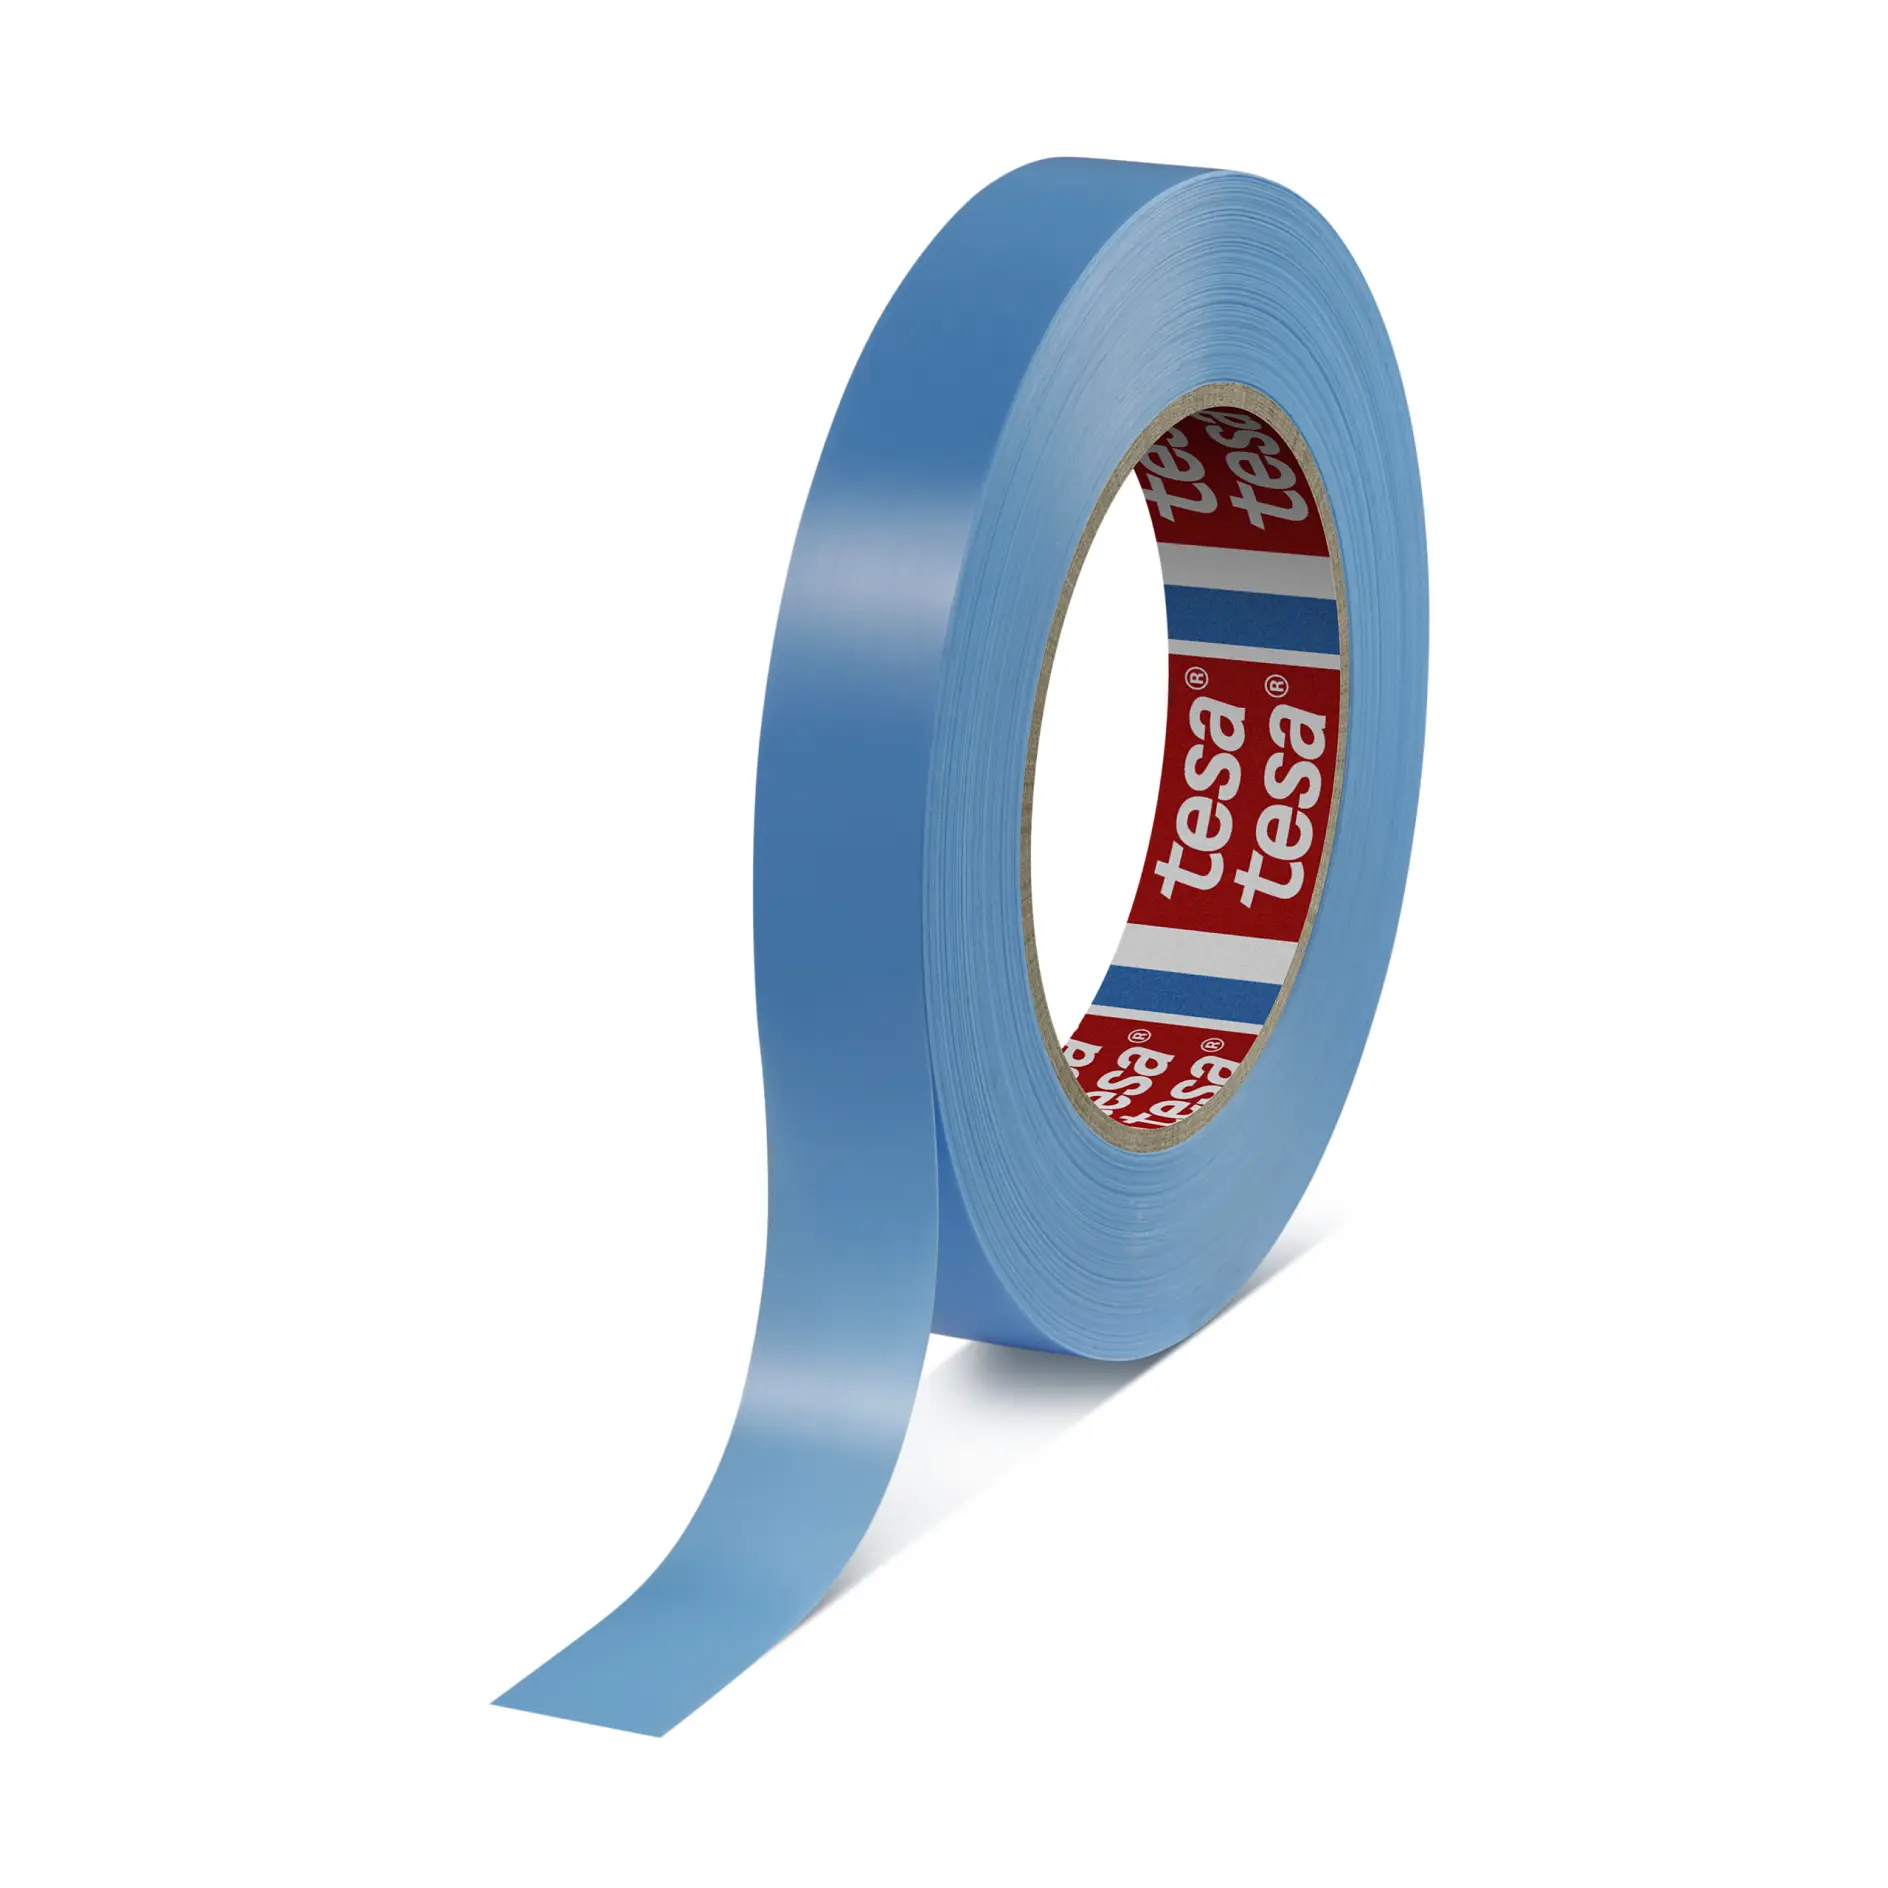 tesa-64284-tensilised-non-staining-strapping-tape-light-blue-642840000000-pr